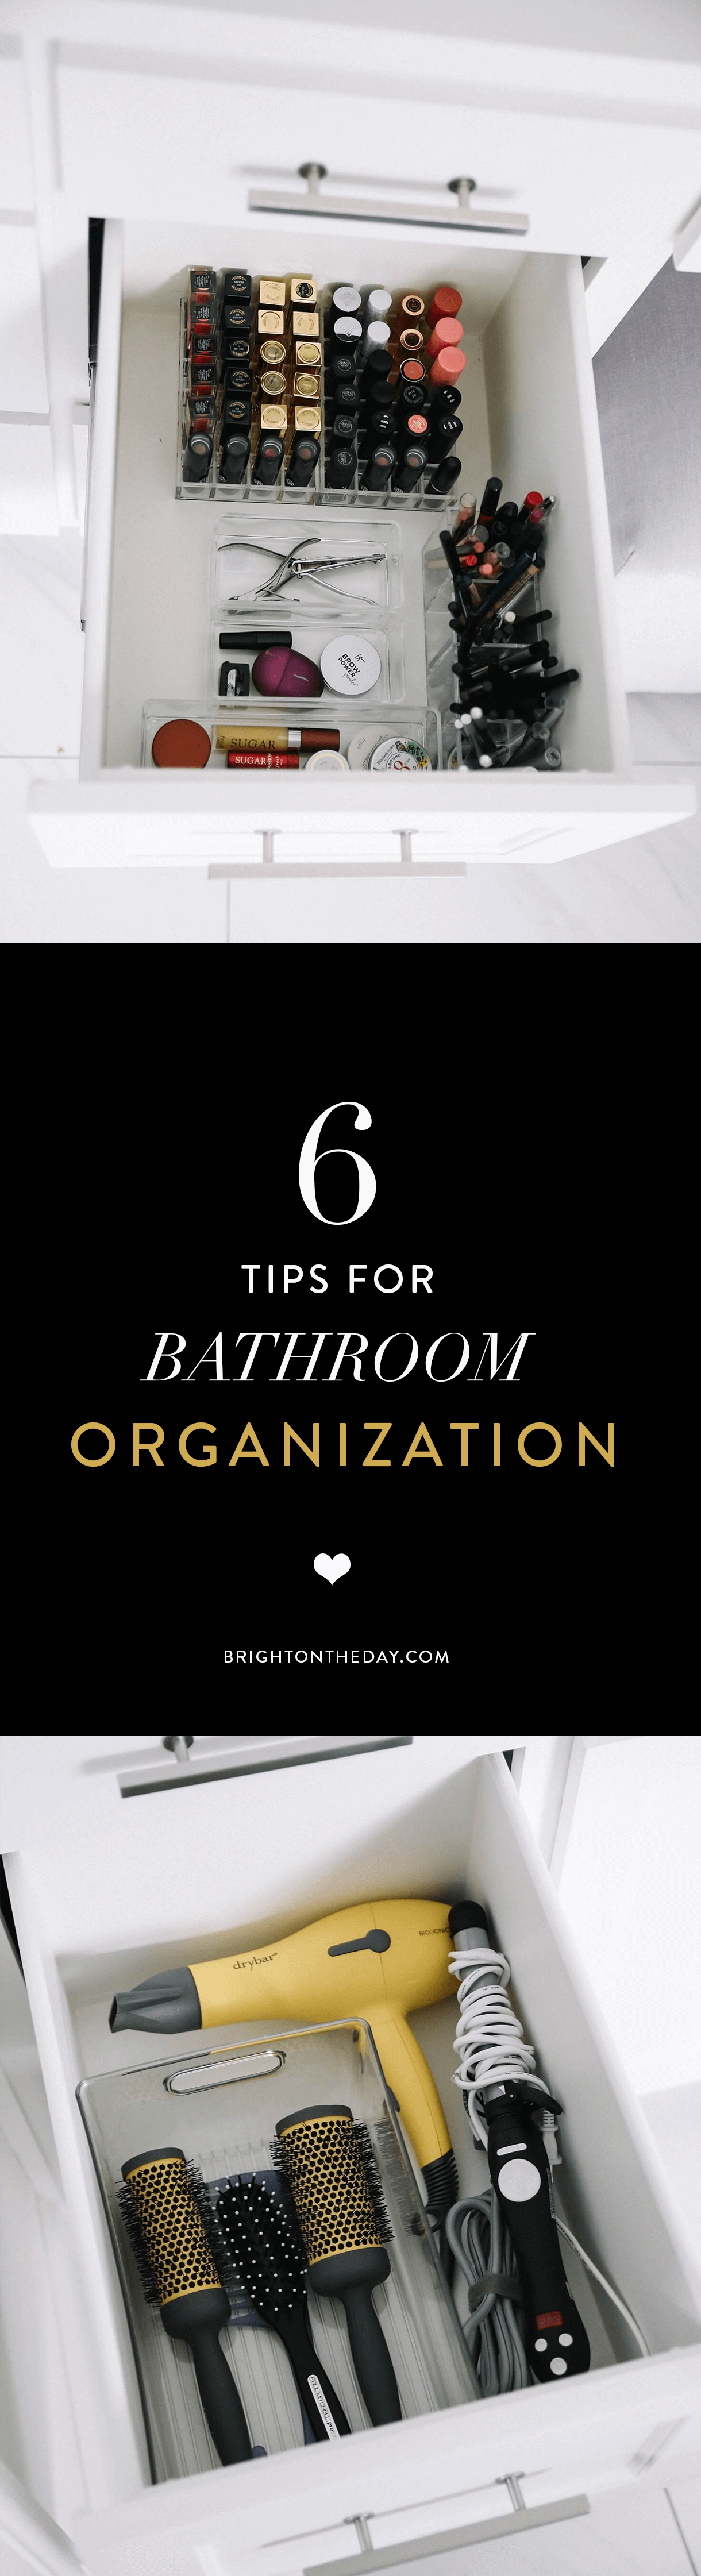 tips for organizing bathroom, 